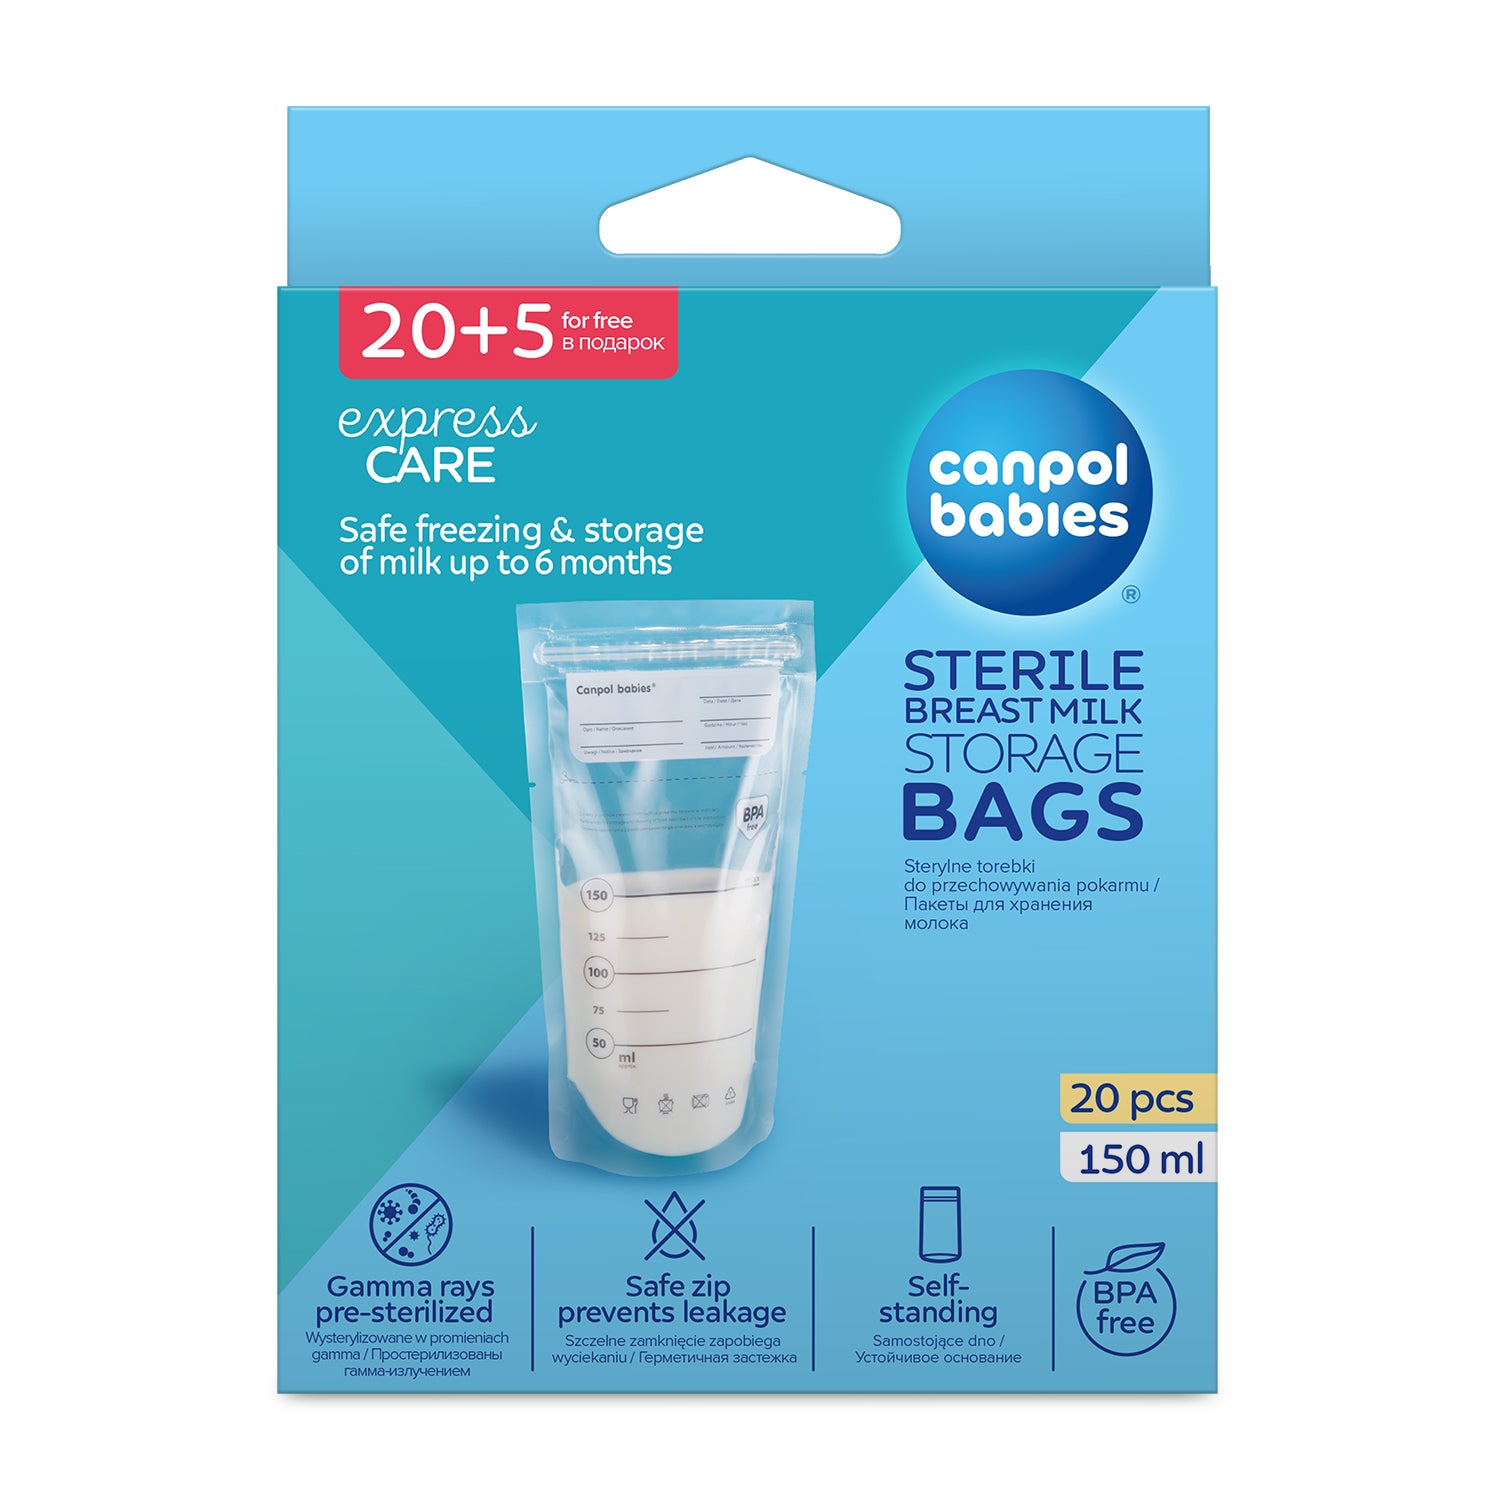 Canpol Babies: 20 x 150 ml food storage bags